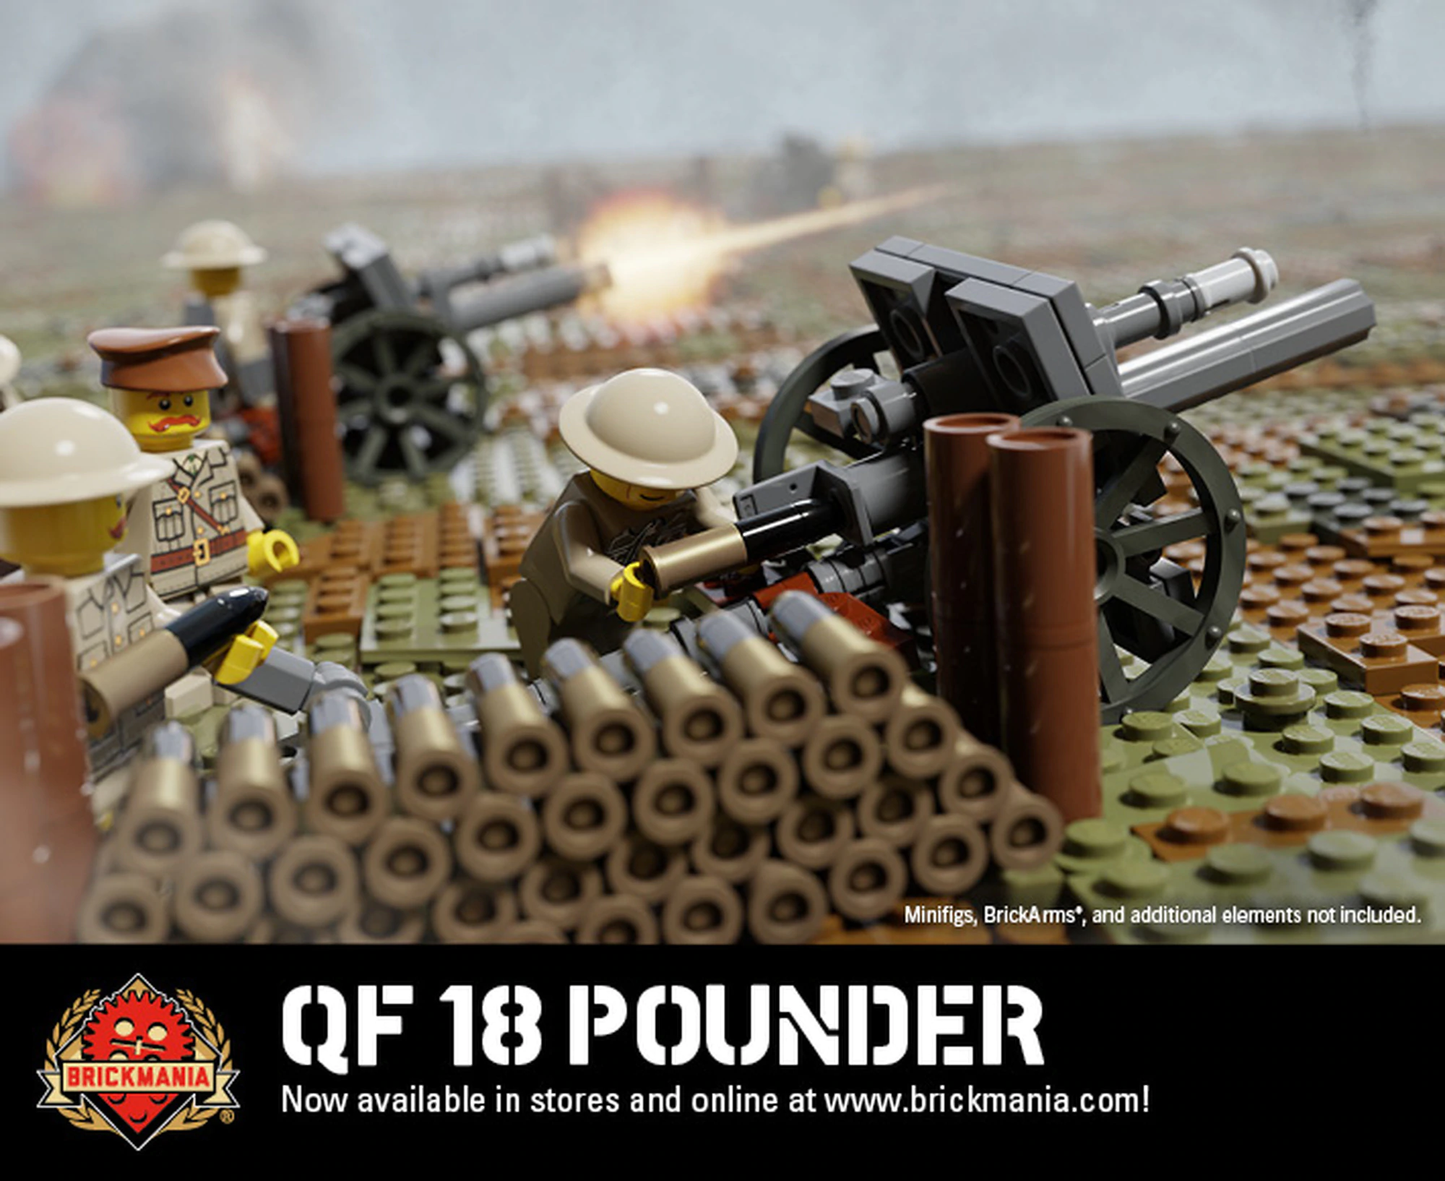 Load image into Gallery viewer, QF 18 Pounder - World War I Field Gun - MOMCOM inc.
